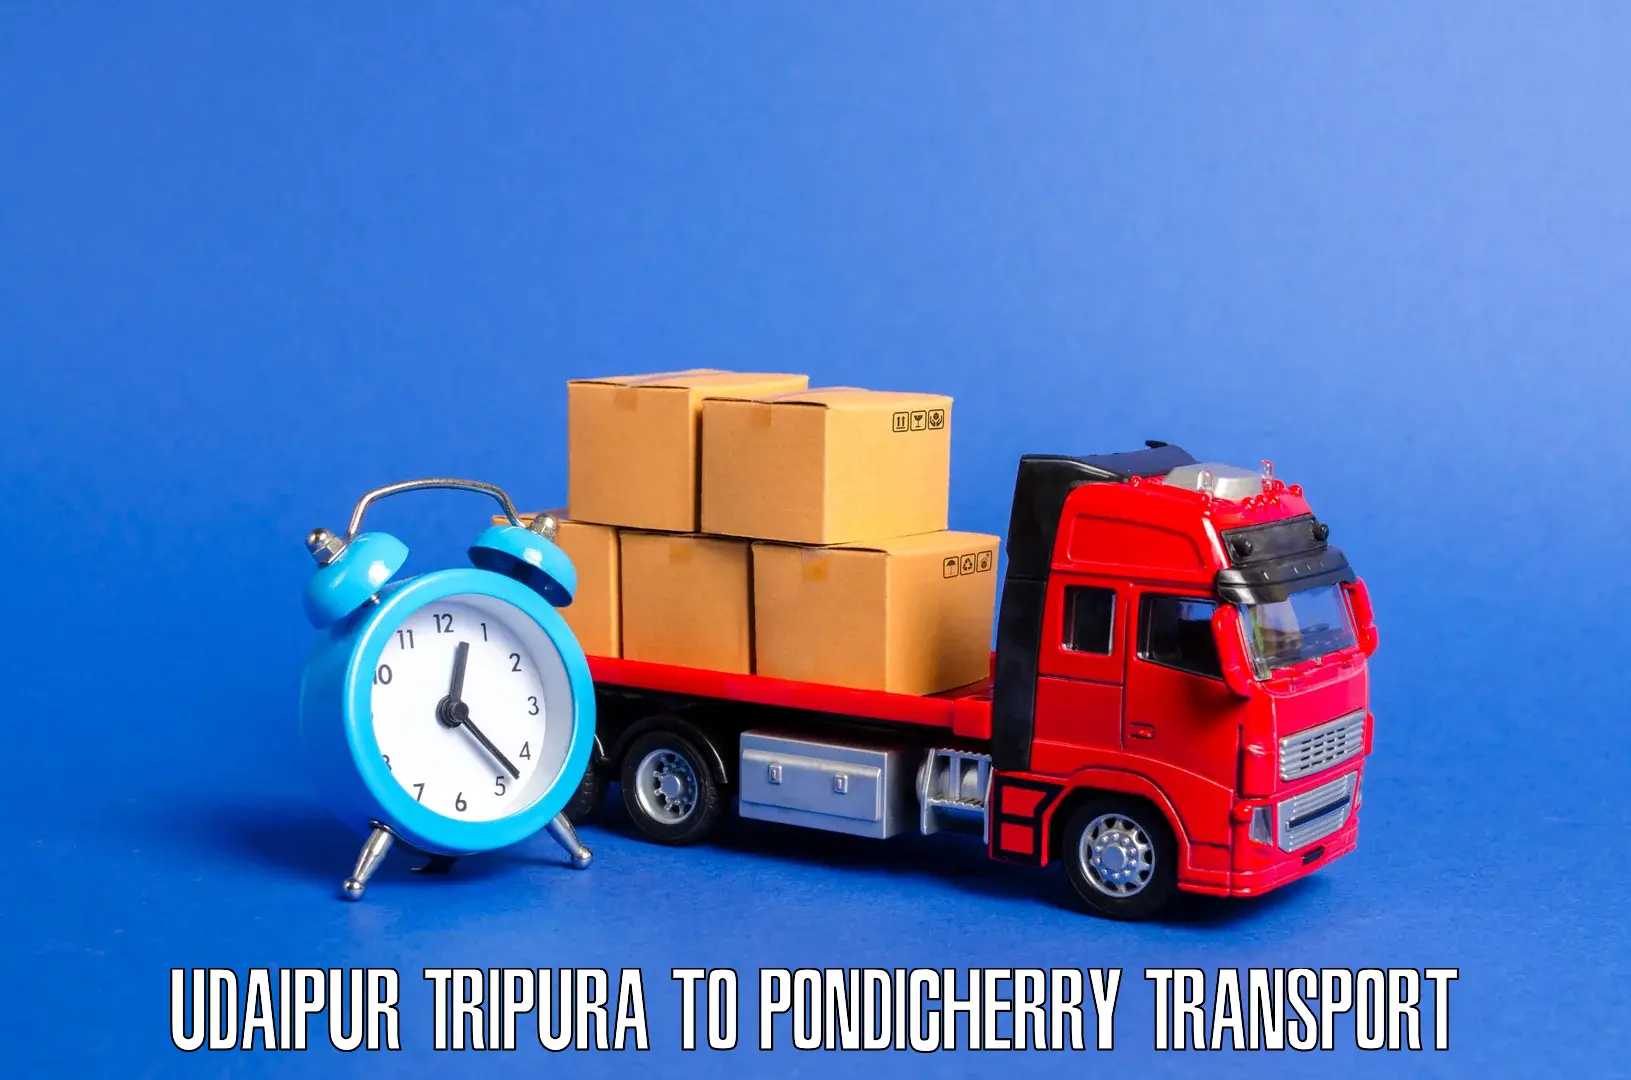 Container transport service Udaipur Tripura to Pondicherry